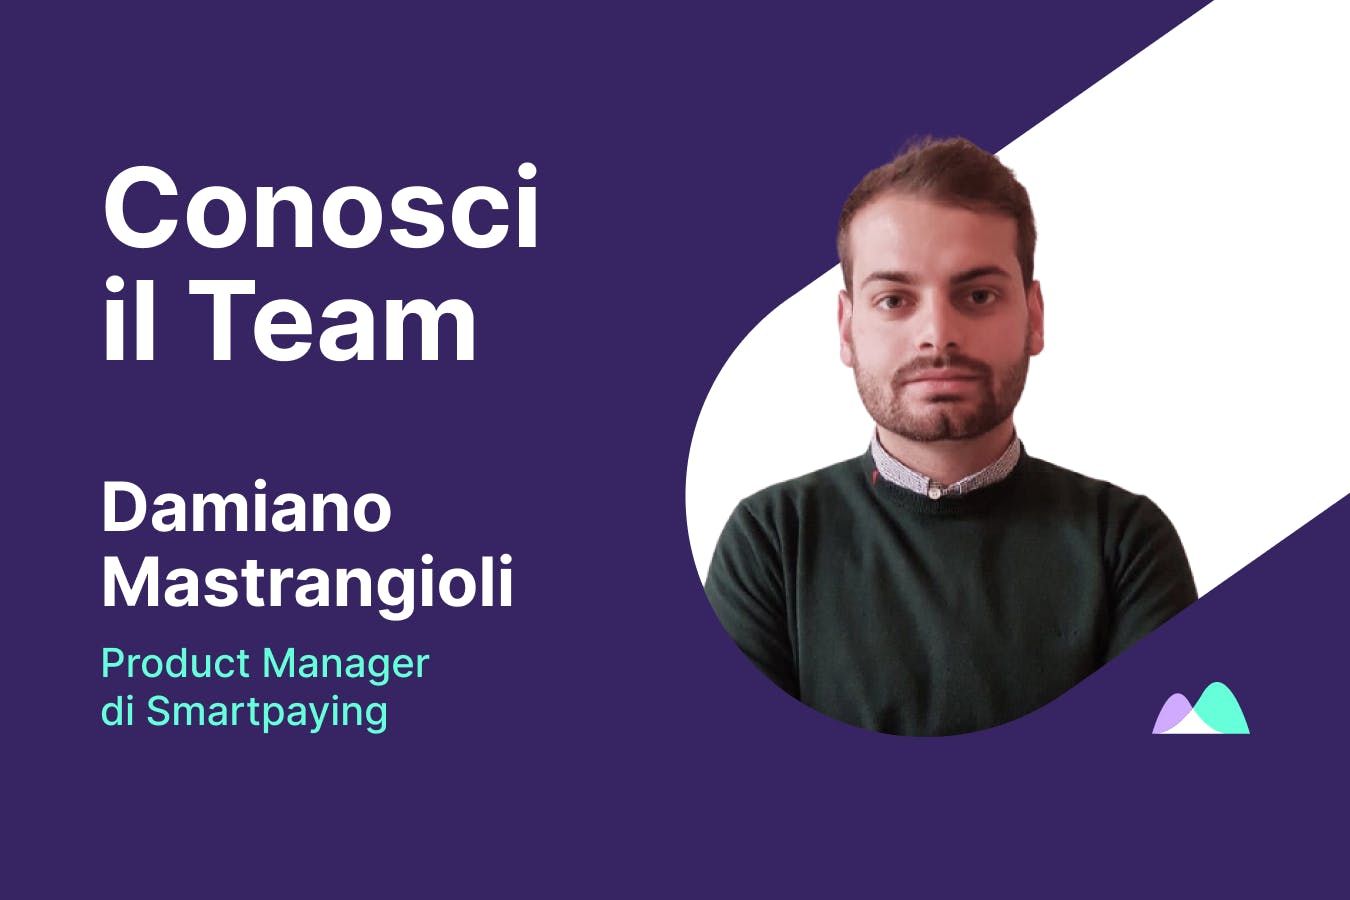 Damiano Mastrangioli, Product Manager in Smartpaying